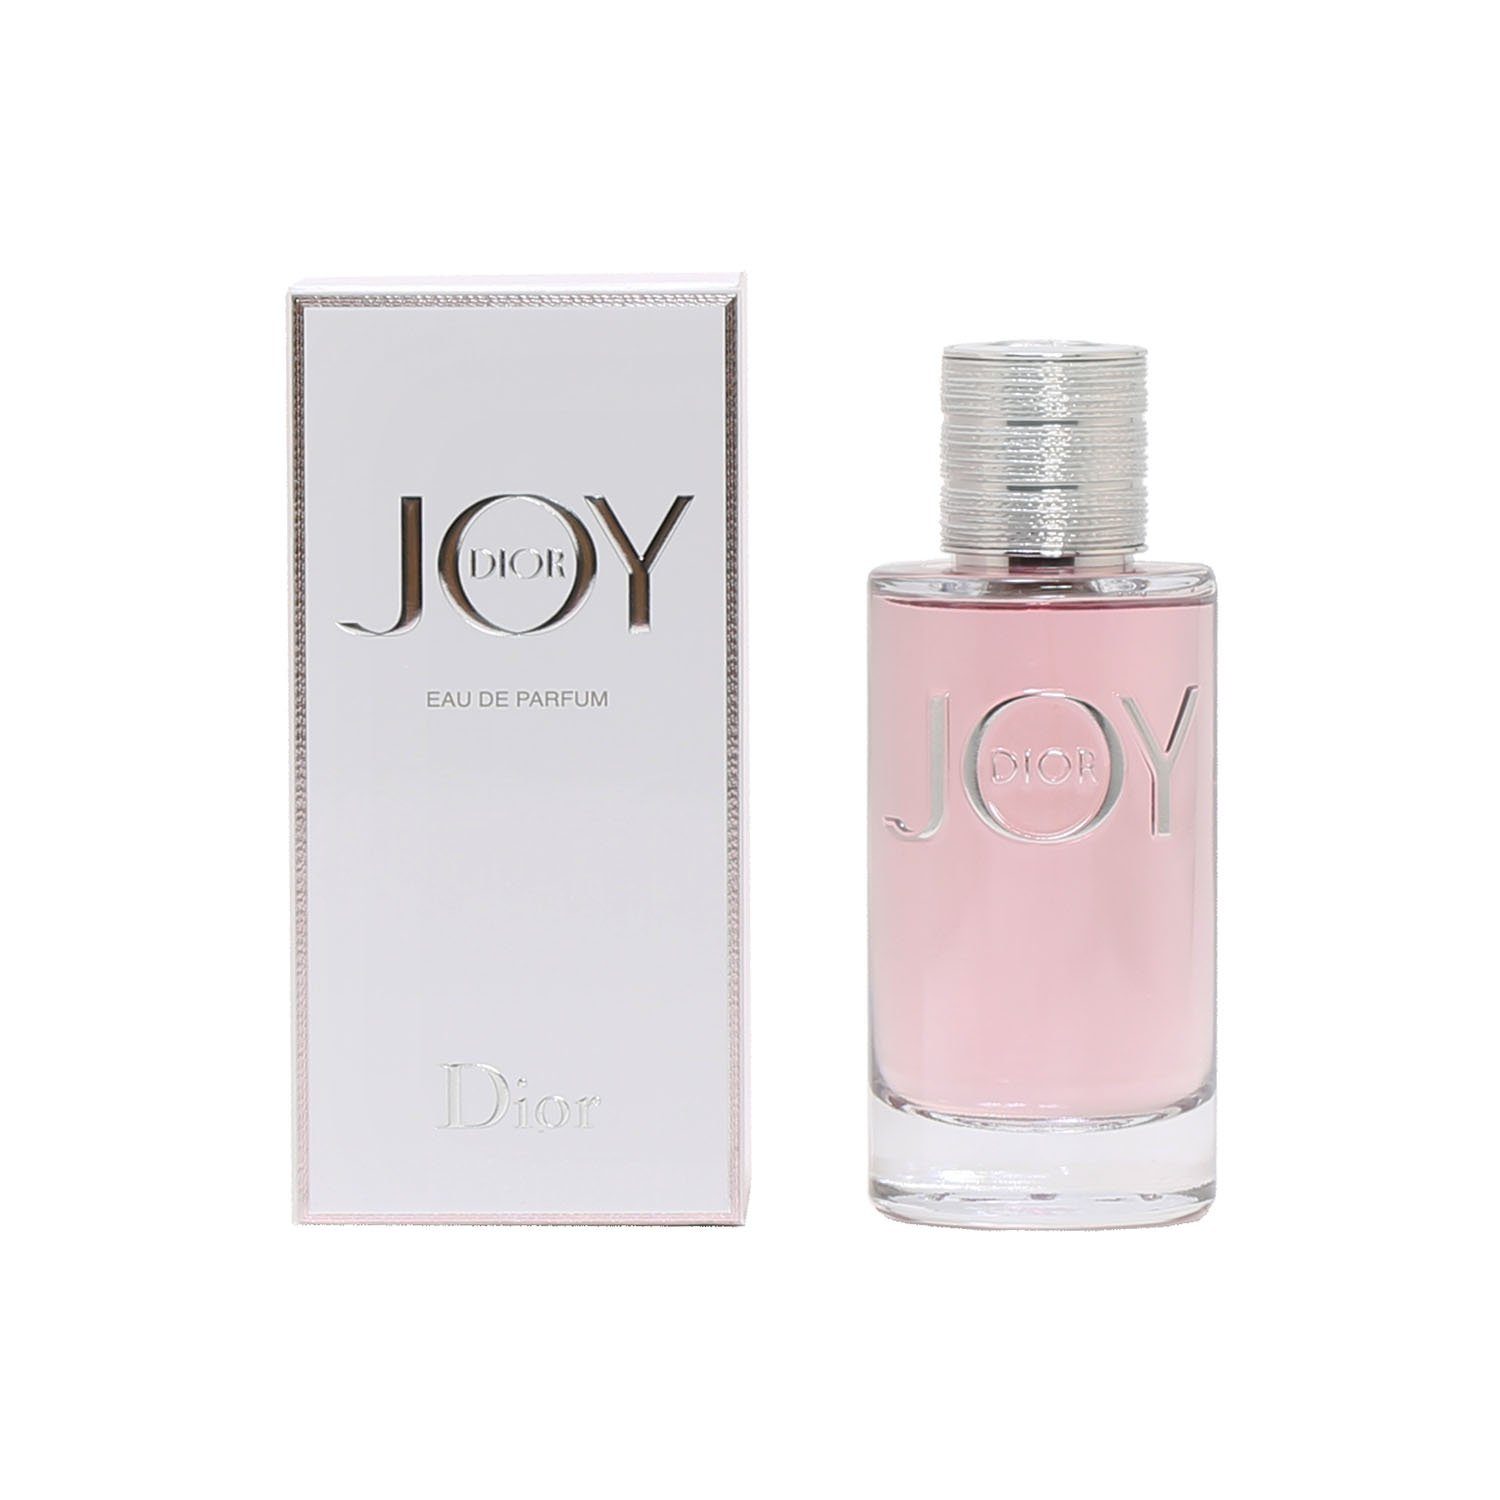 Perfume - JOY FOR WOMEN BY DIOR - EAU DE PARFUM SPRAY